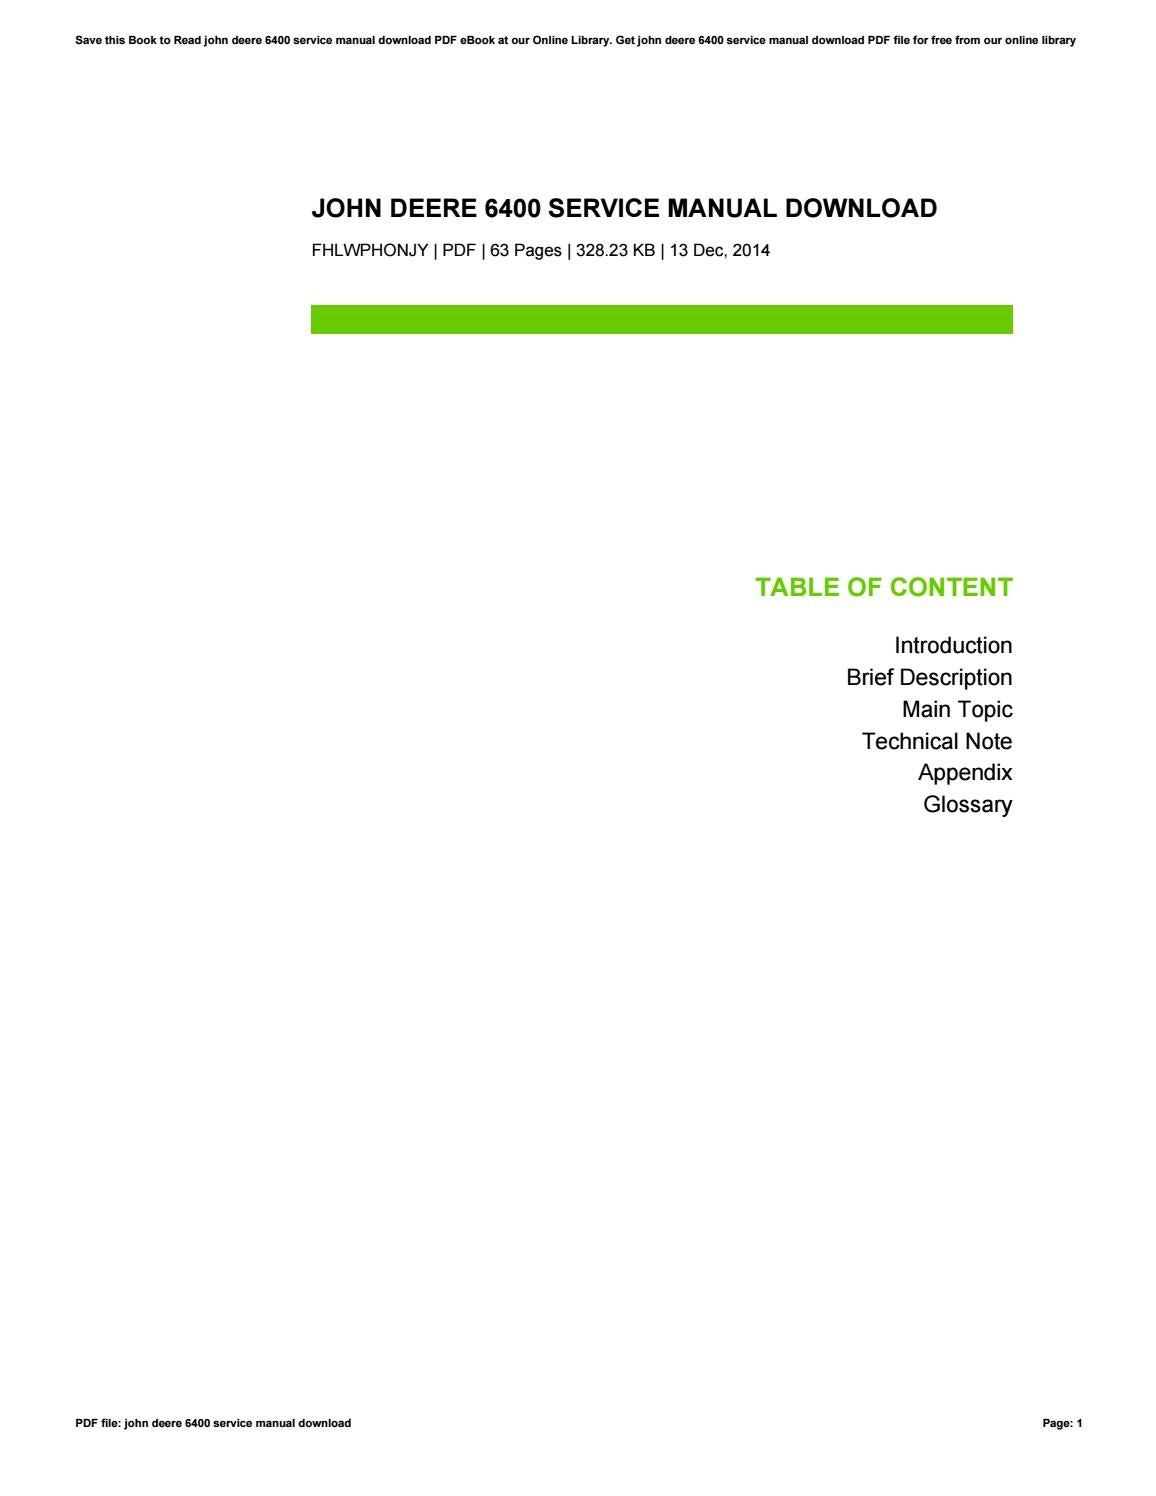 download john deere maintenance manuals